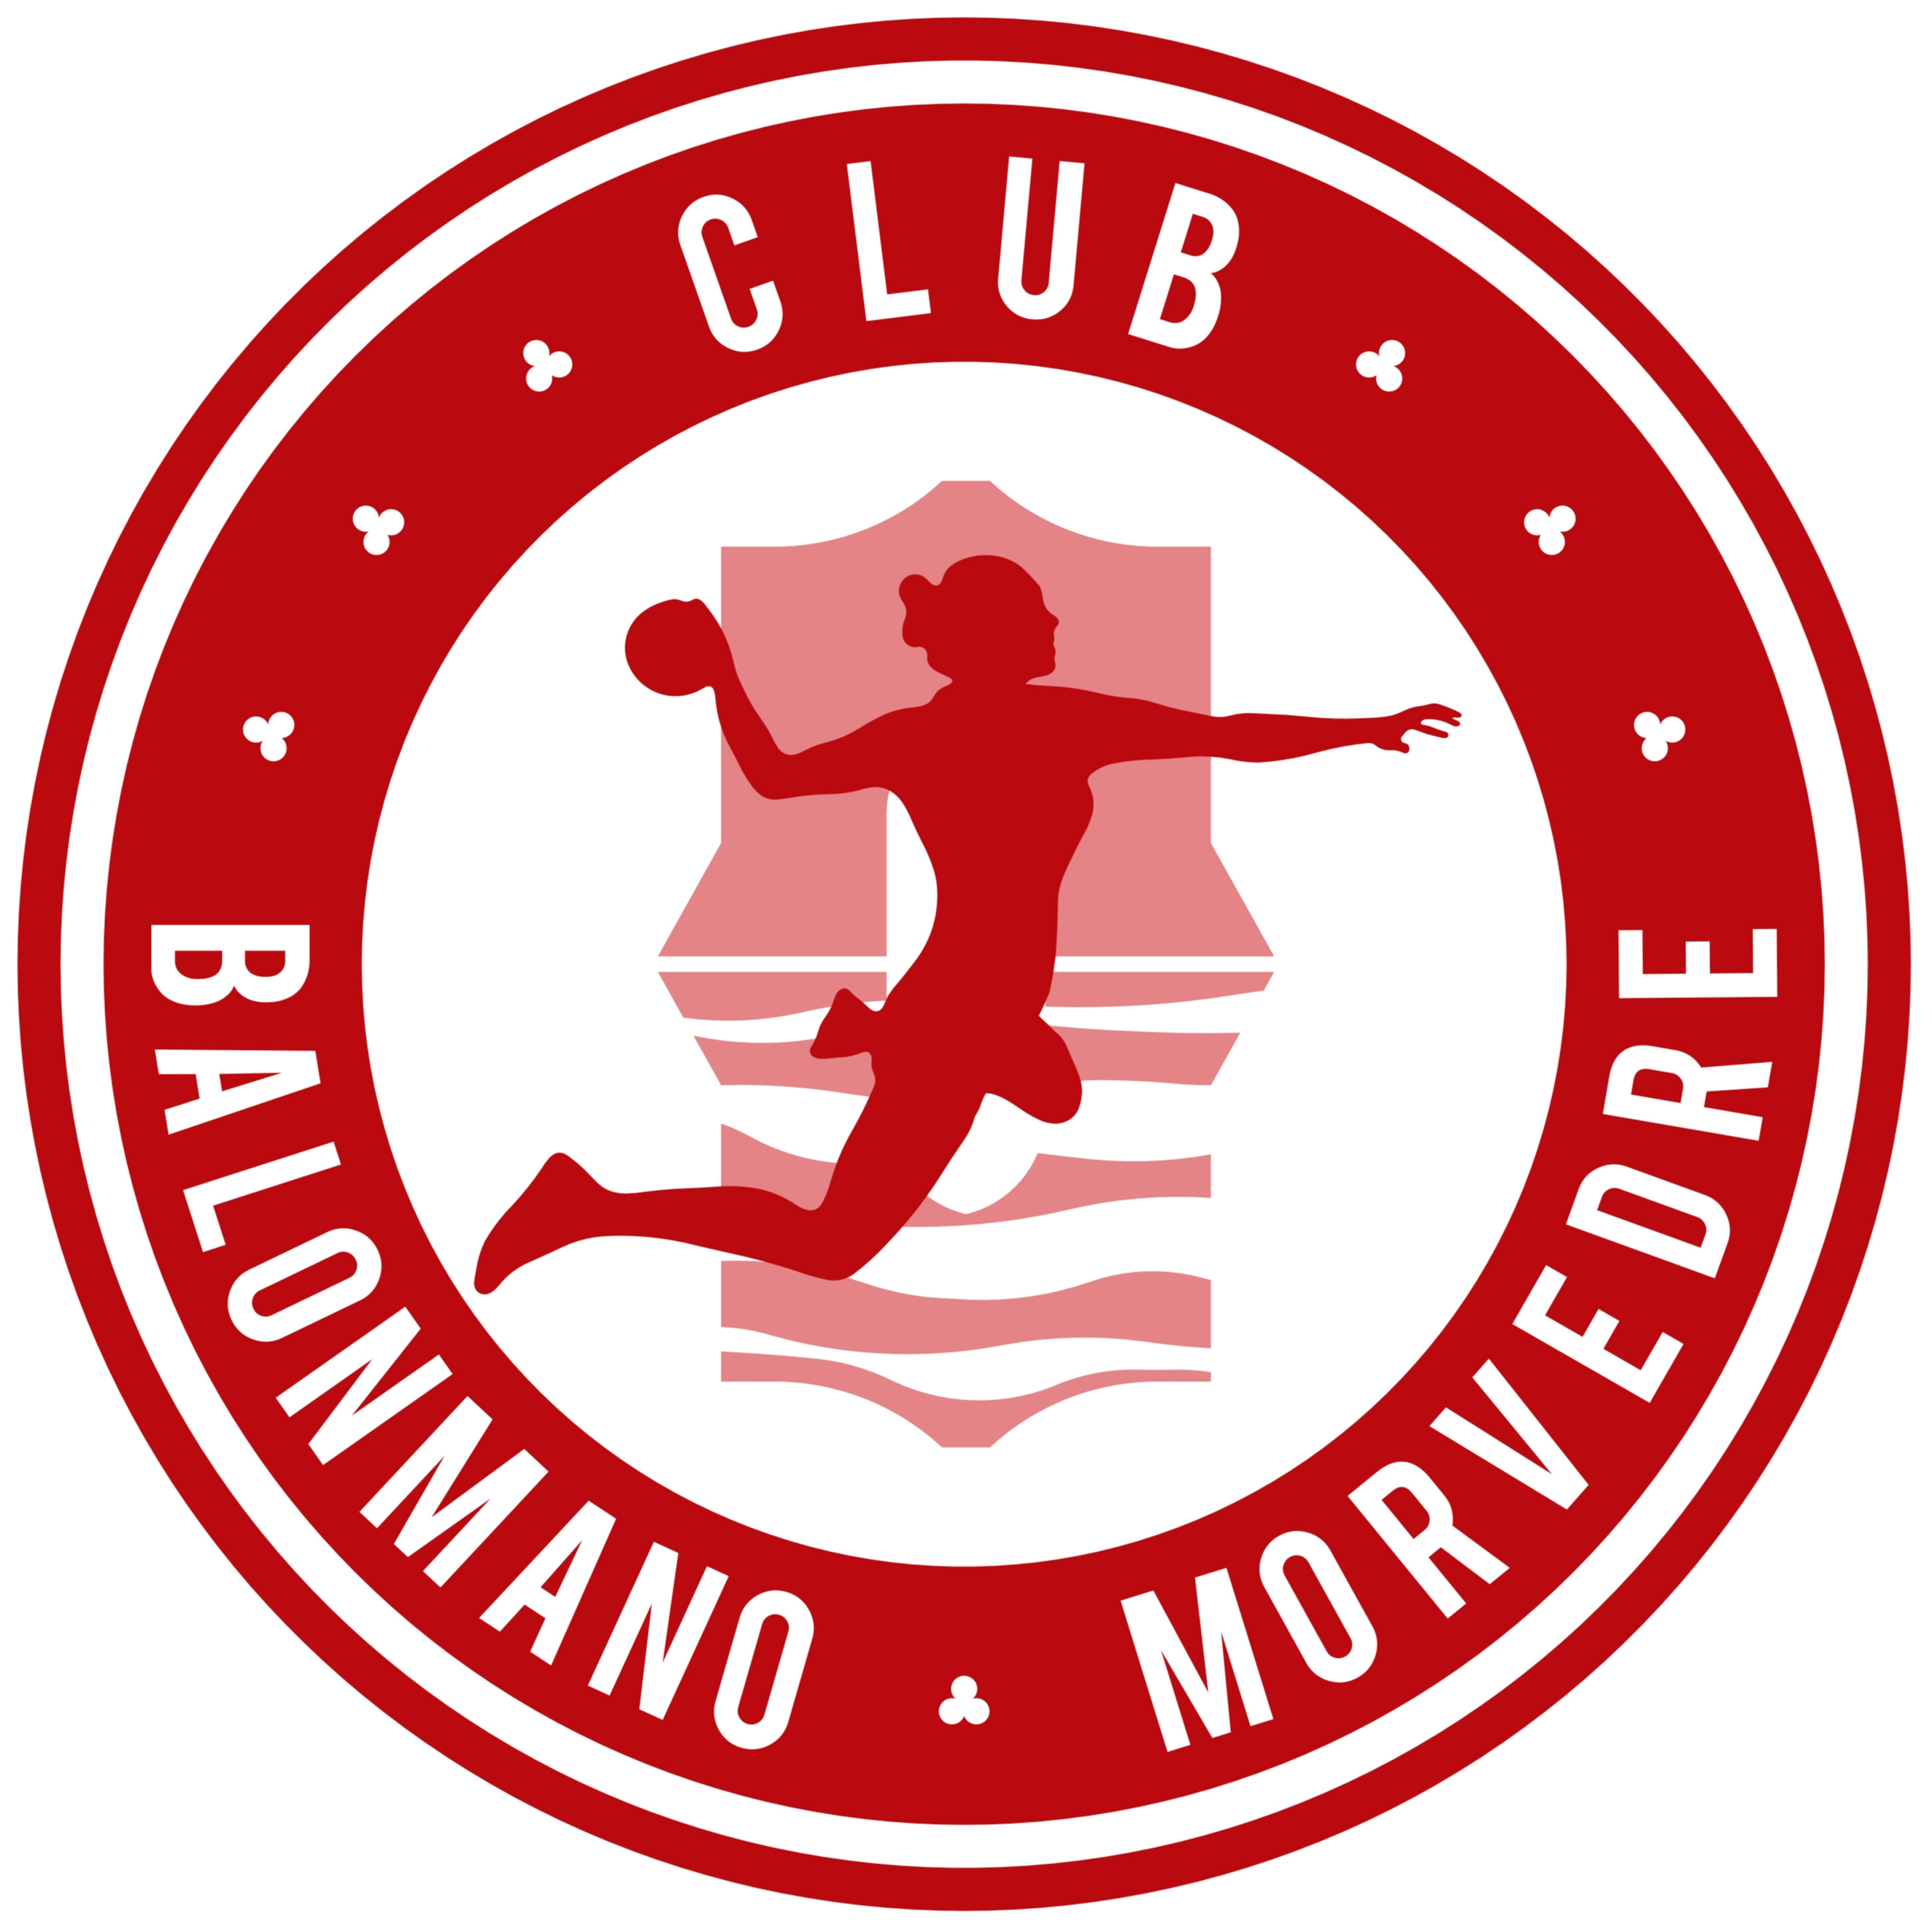 CLUB BALONMANO MORVEDRE